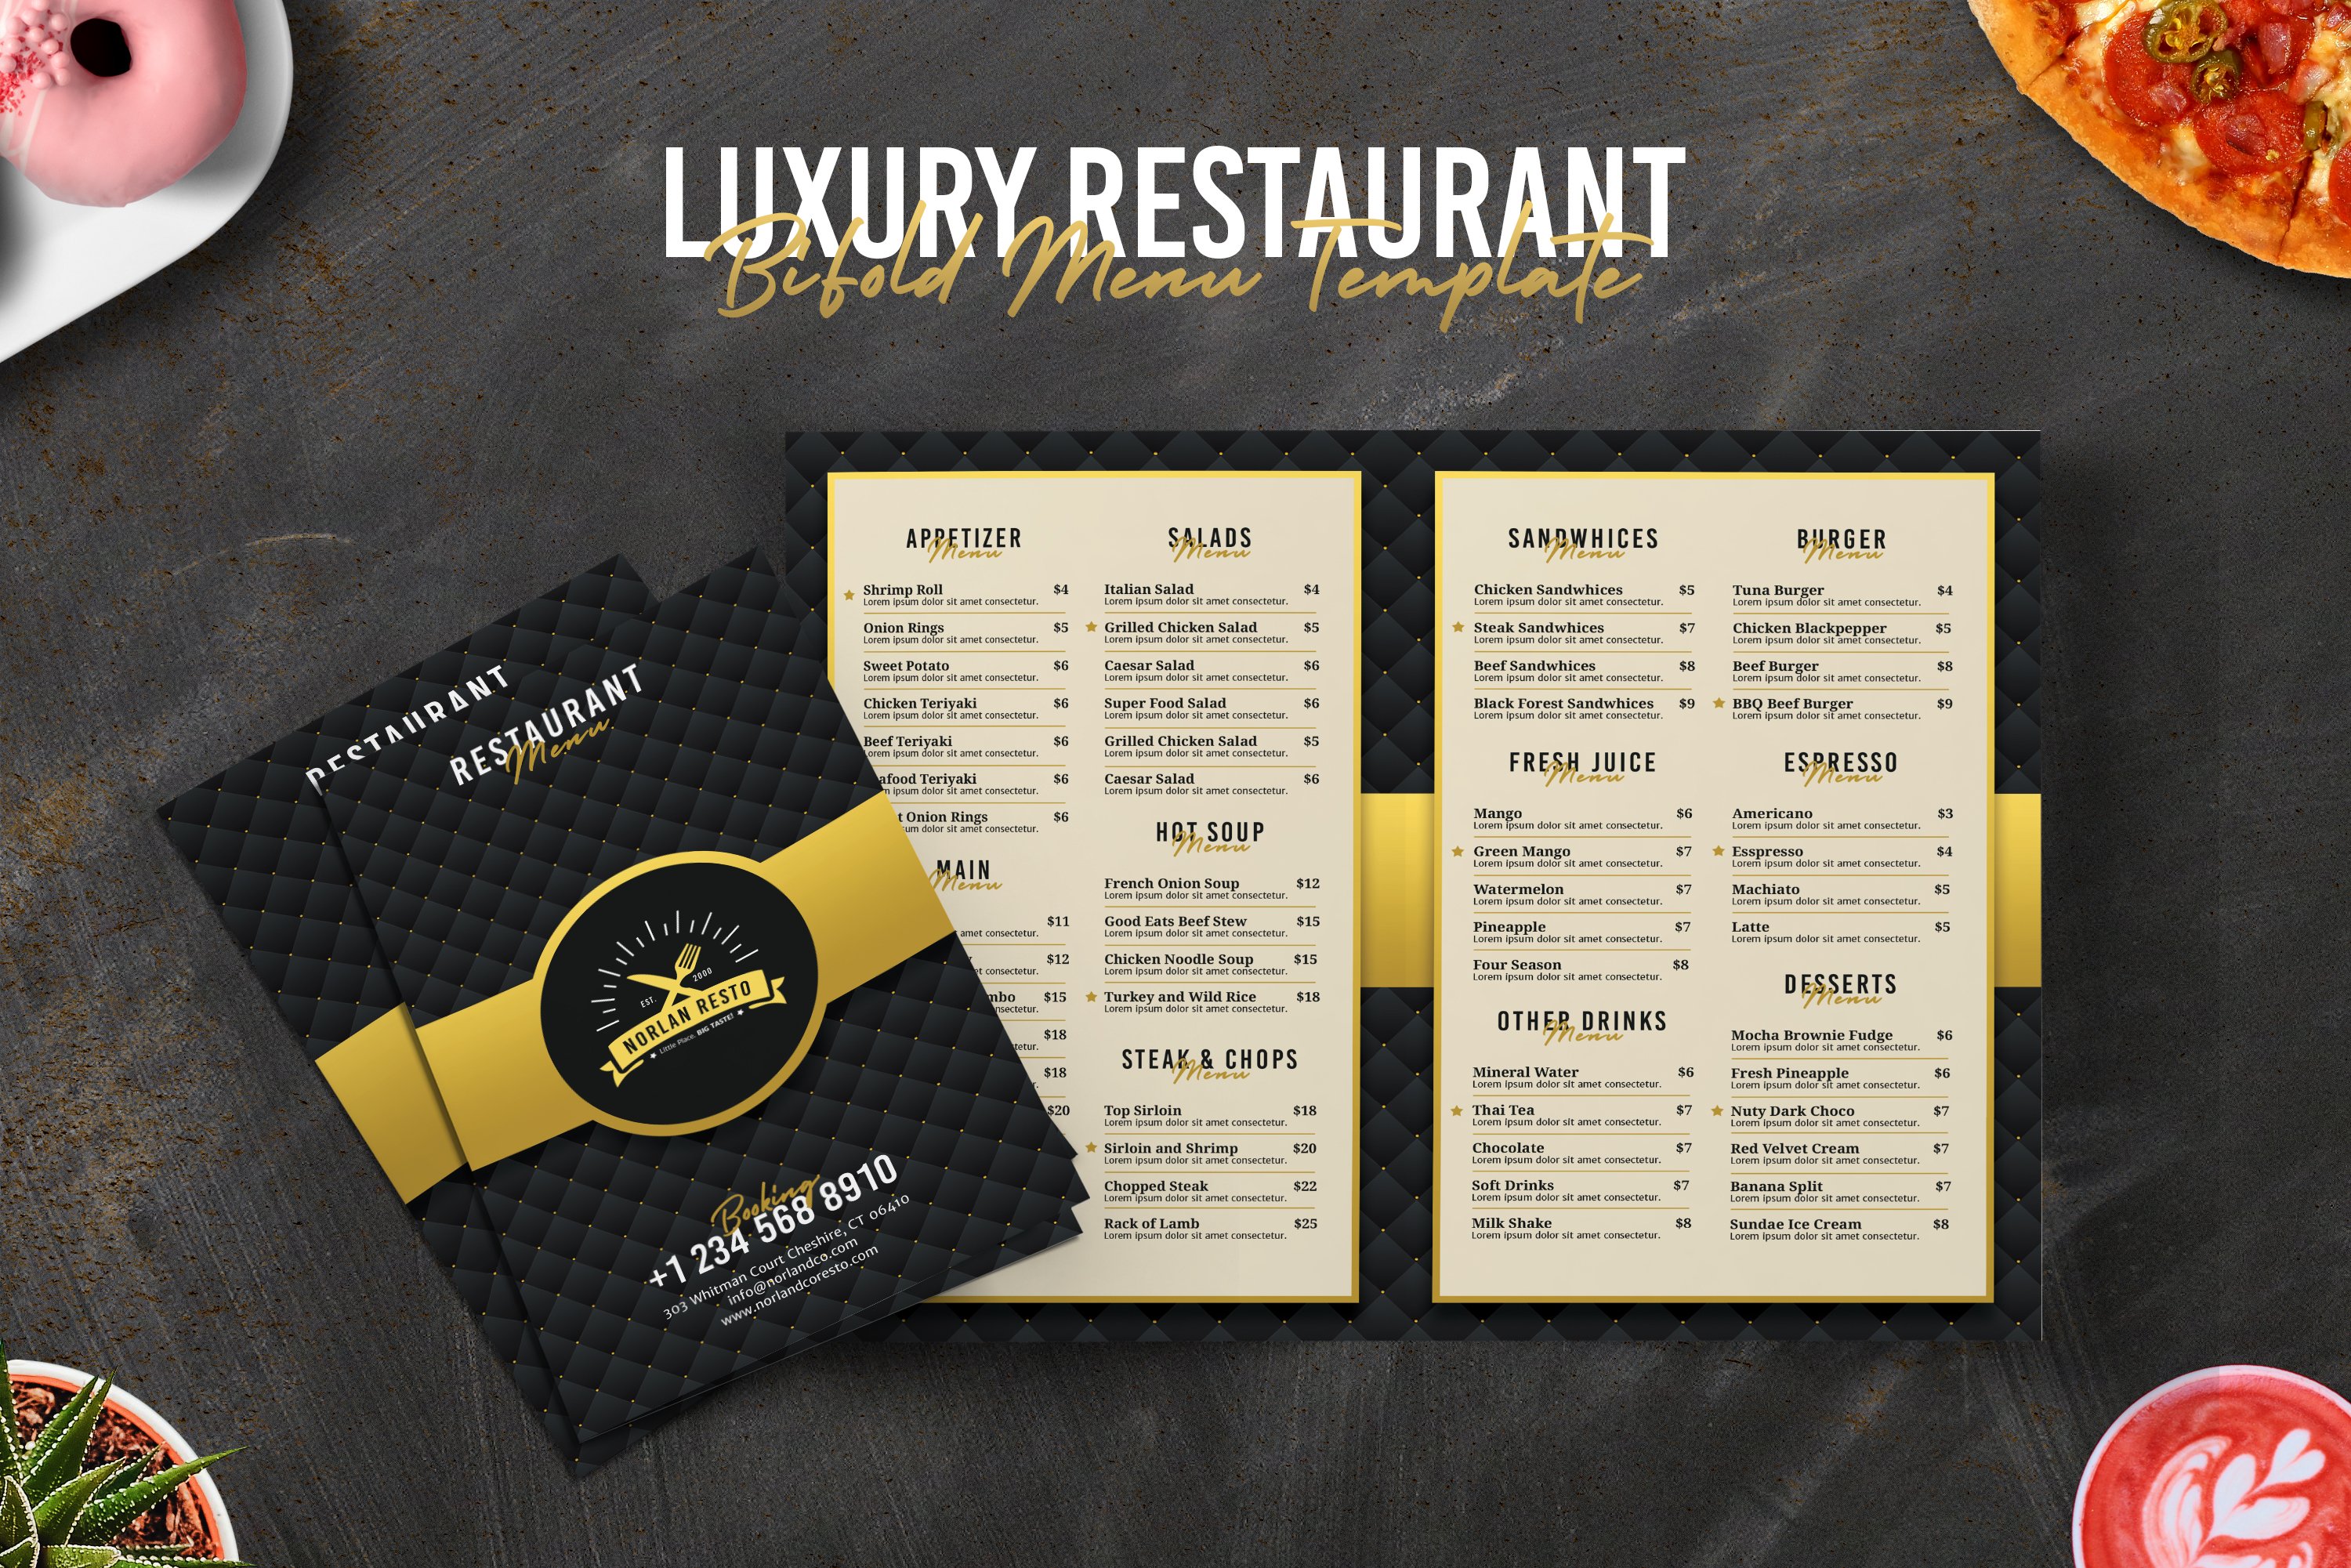 Luxury Restaurant BiFold Menu cover image.